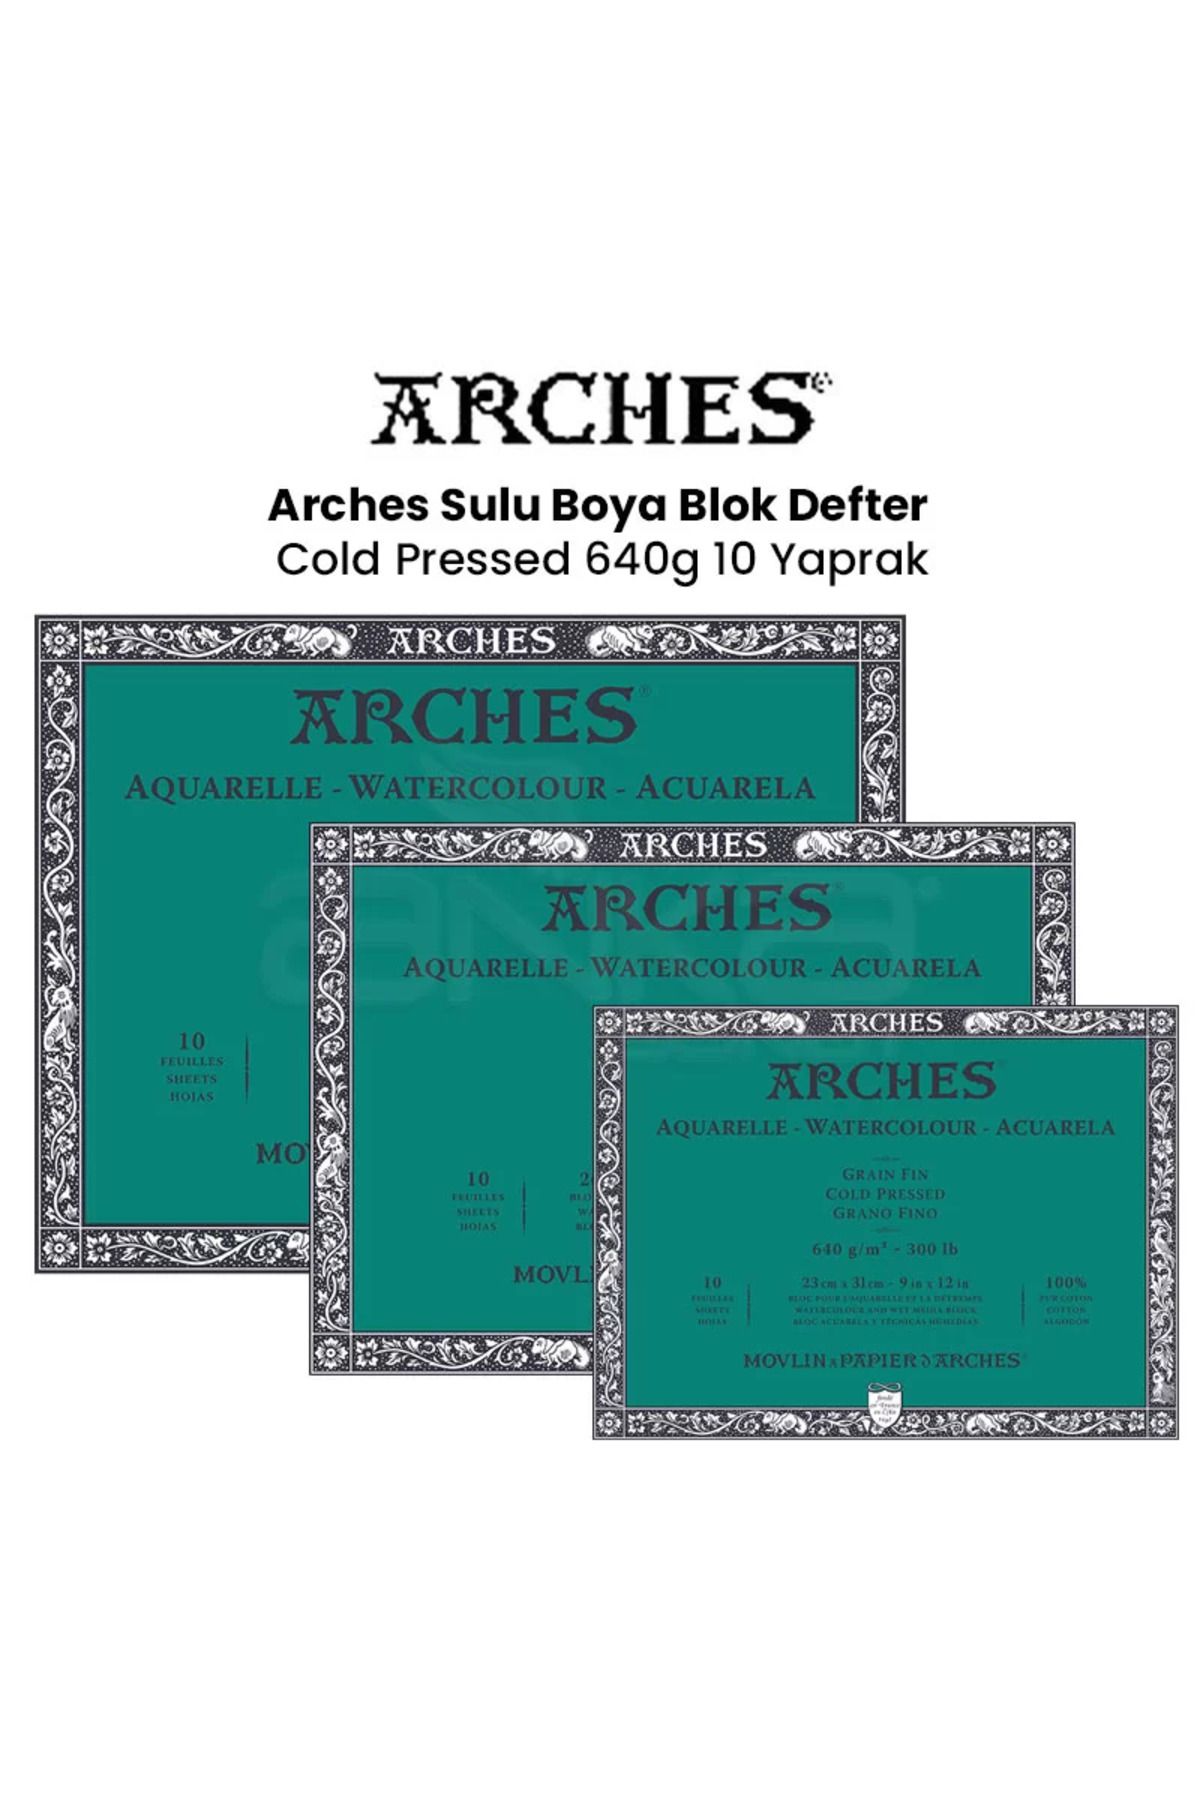 Arches Sulu Boya Blok Defter Cold Pressed 640g 10 Yaprak